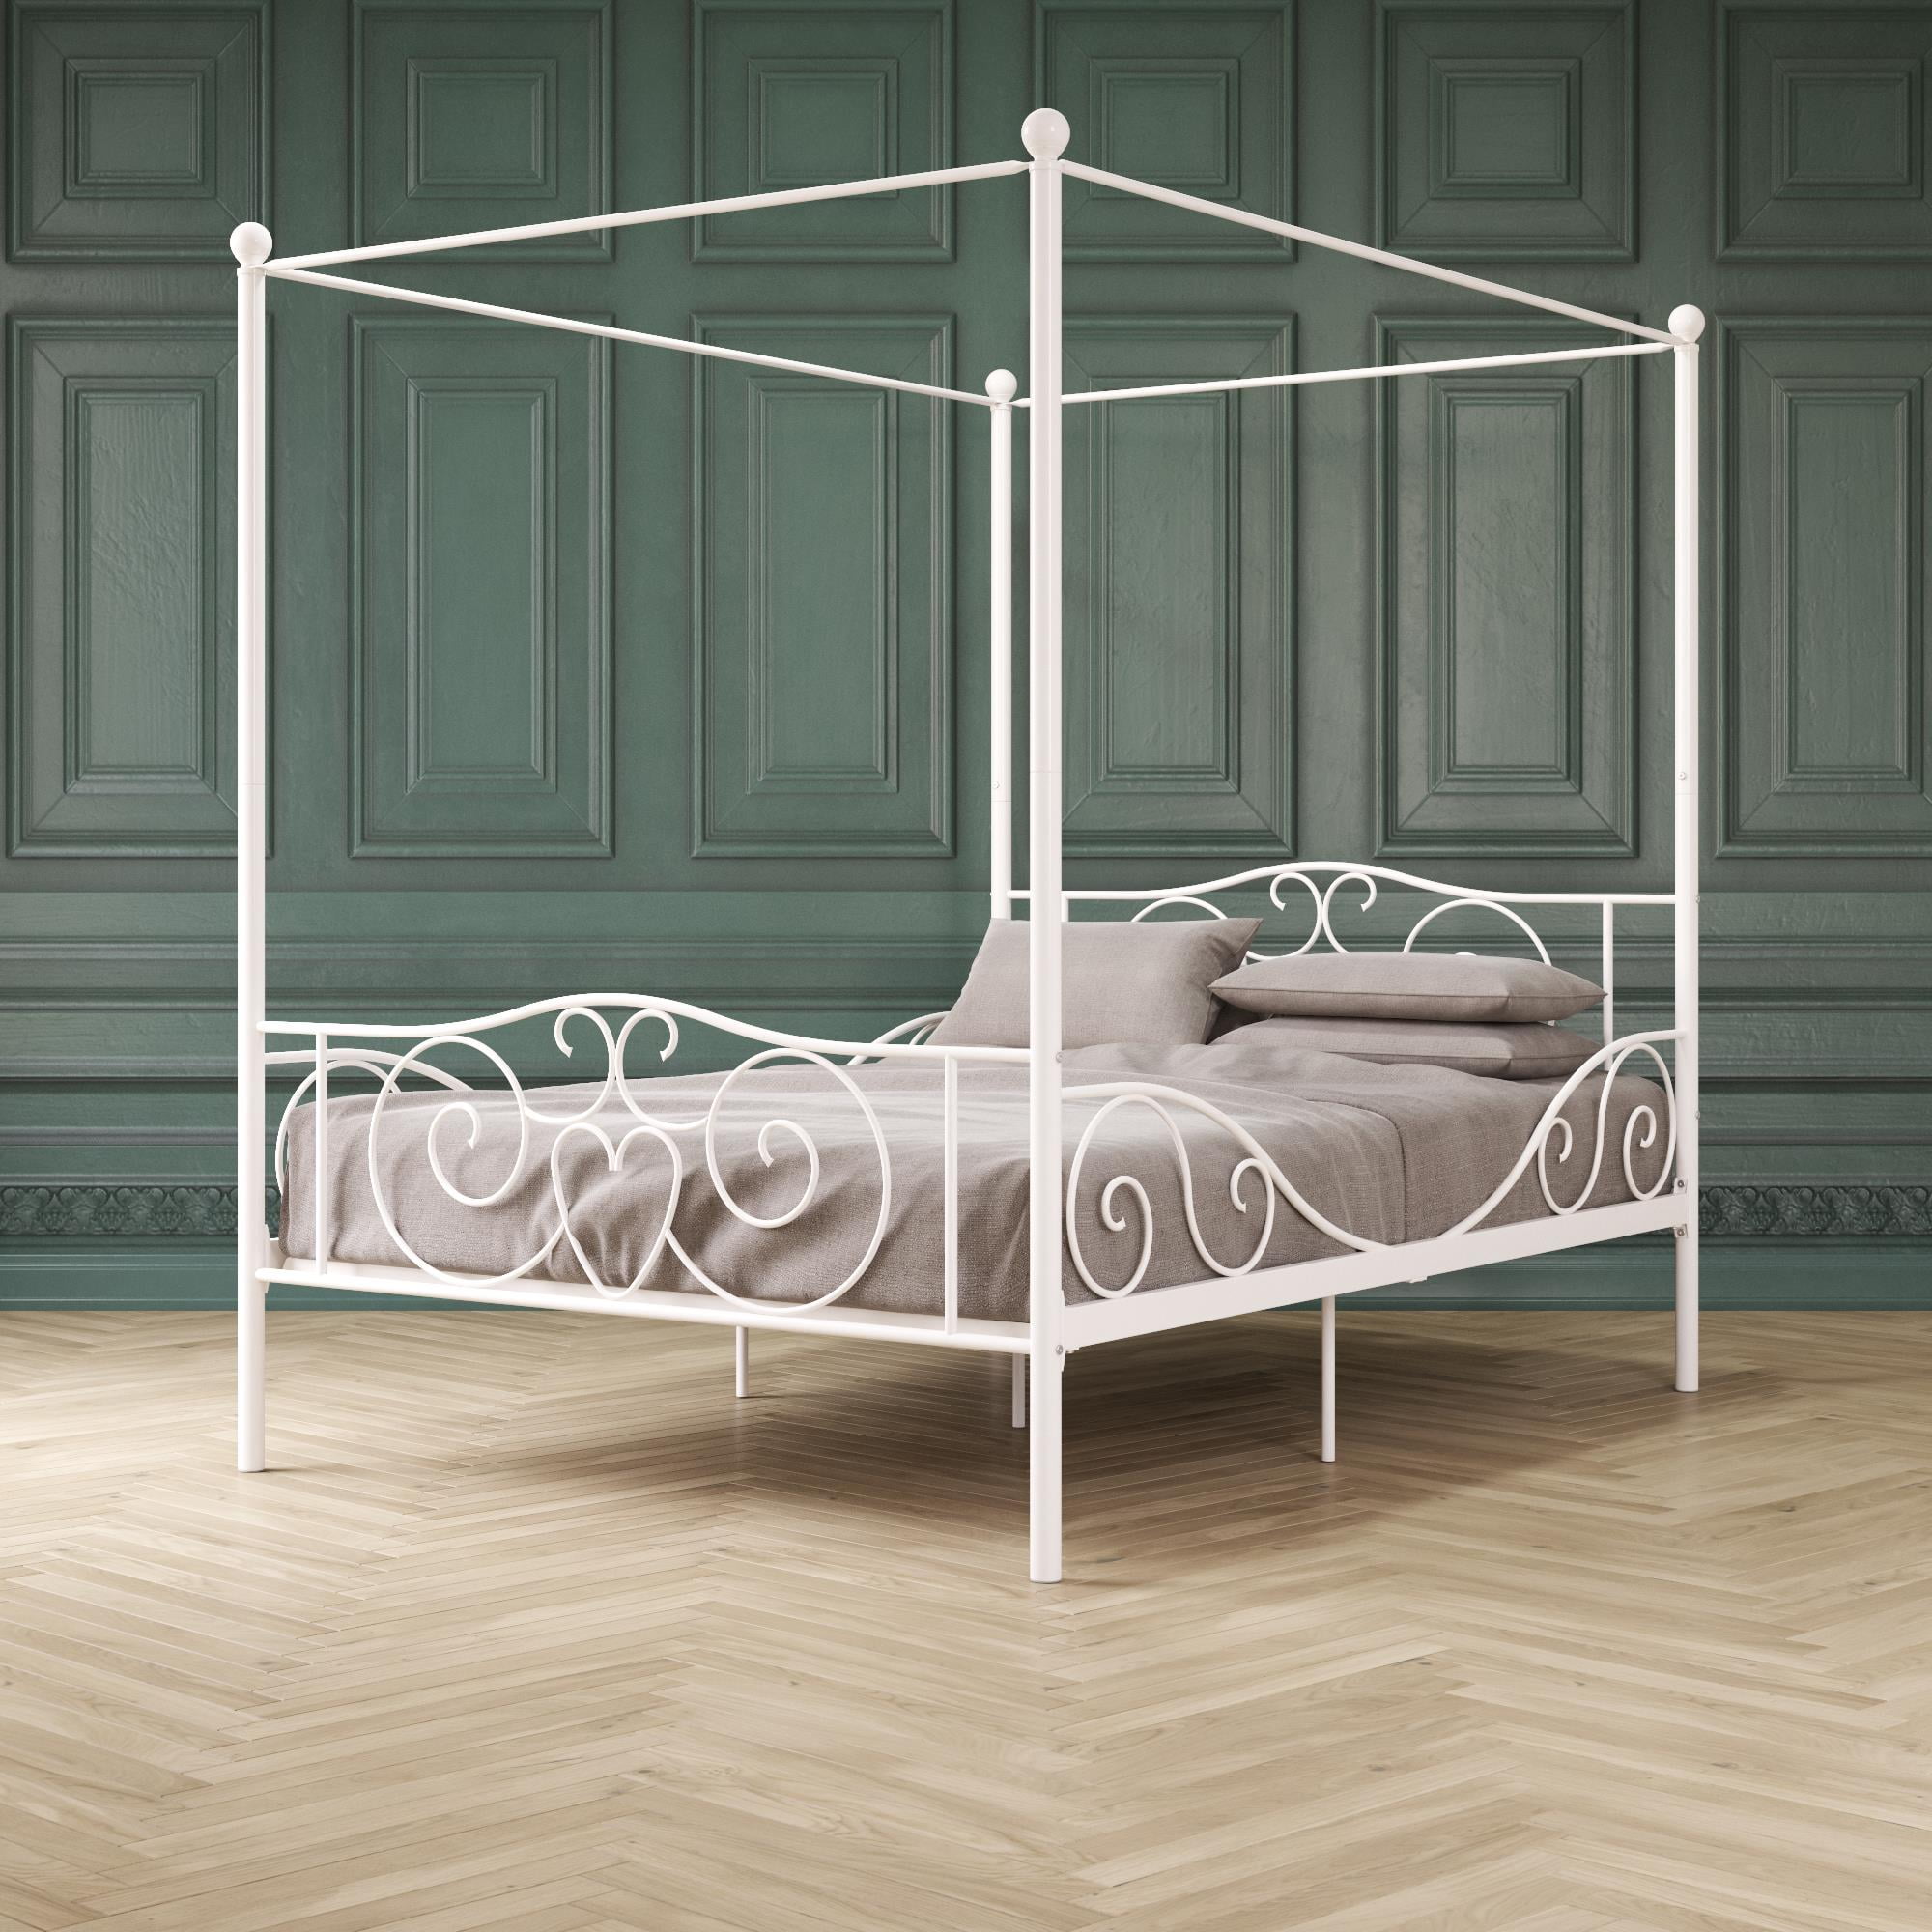 Elm Oak Canopy Metal Bed Full Size, White Heart Bed Frame